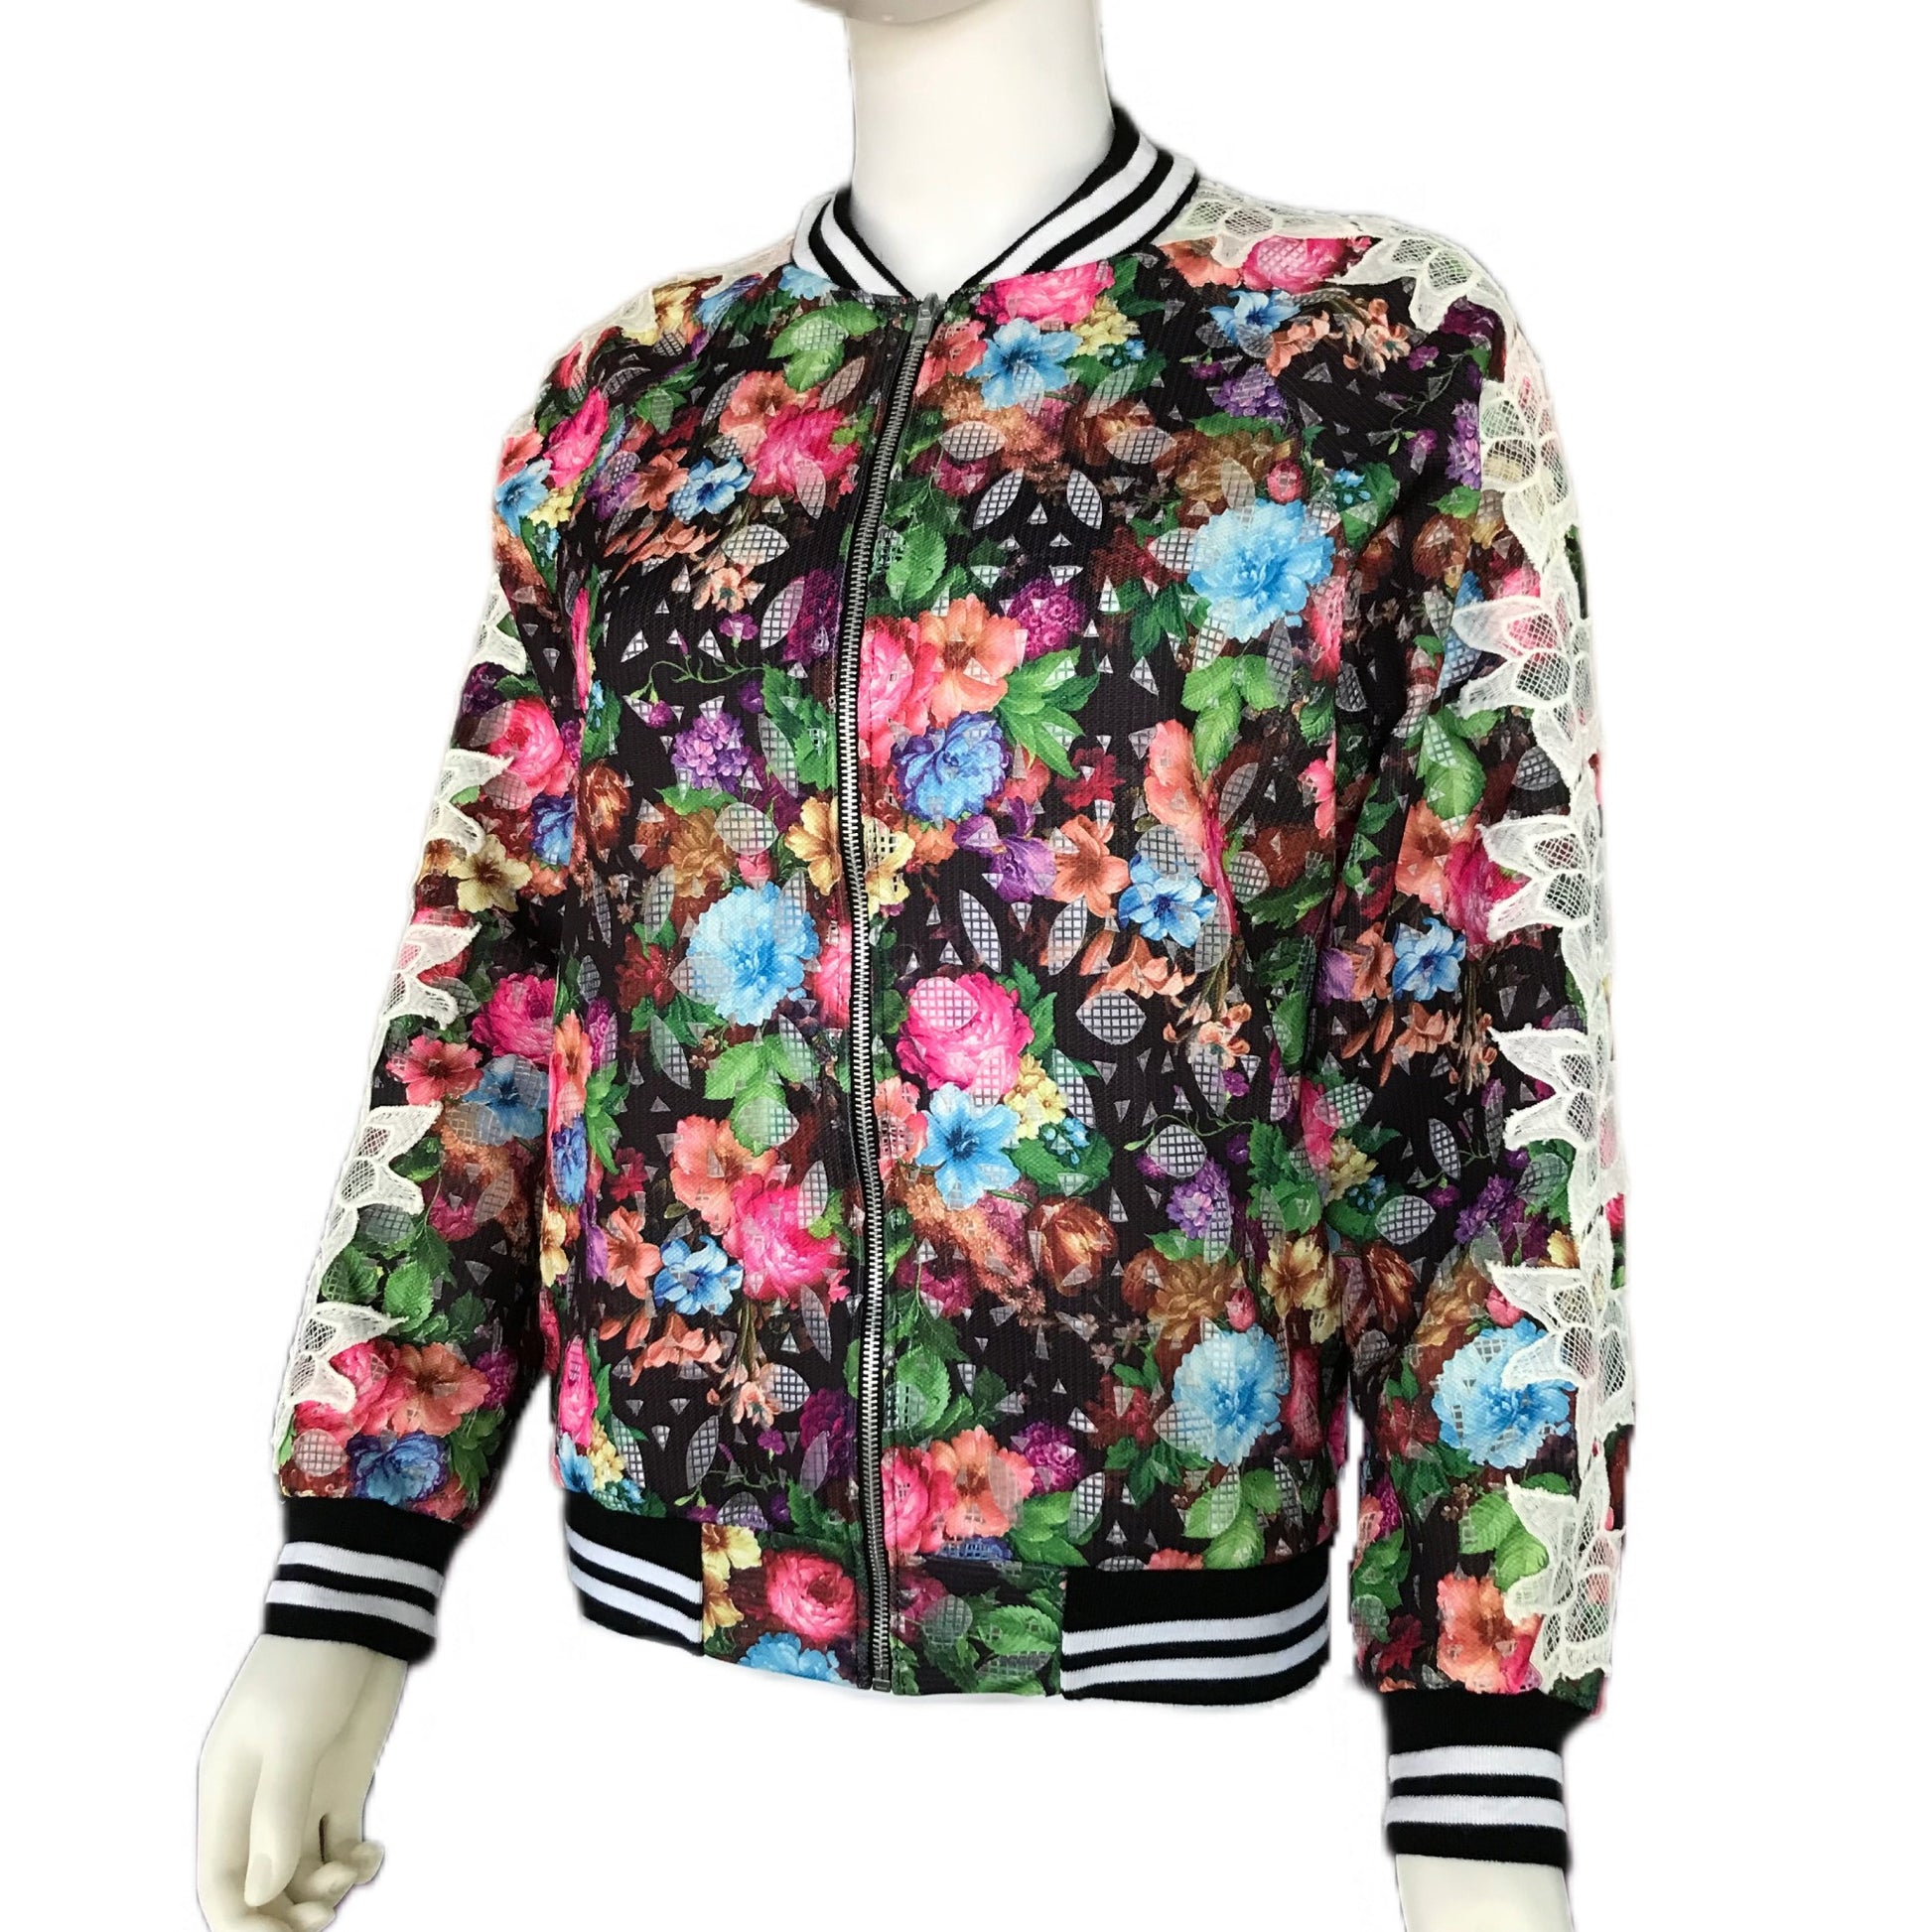 Women's Laser-cut Floral Lace Bomber Jacket - Petite Sizing